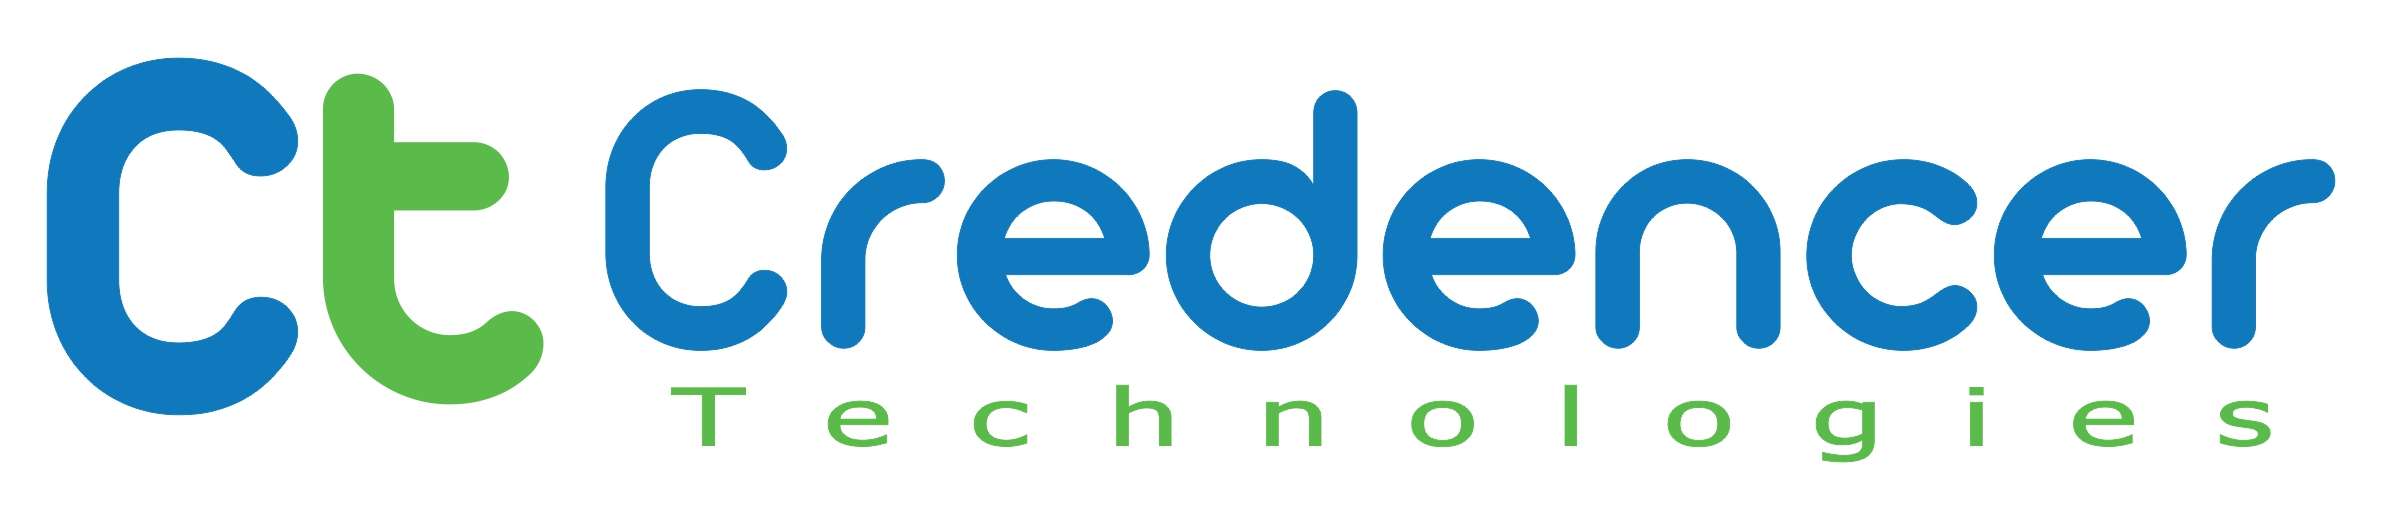 techtrix-sidebar-logo